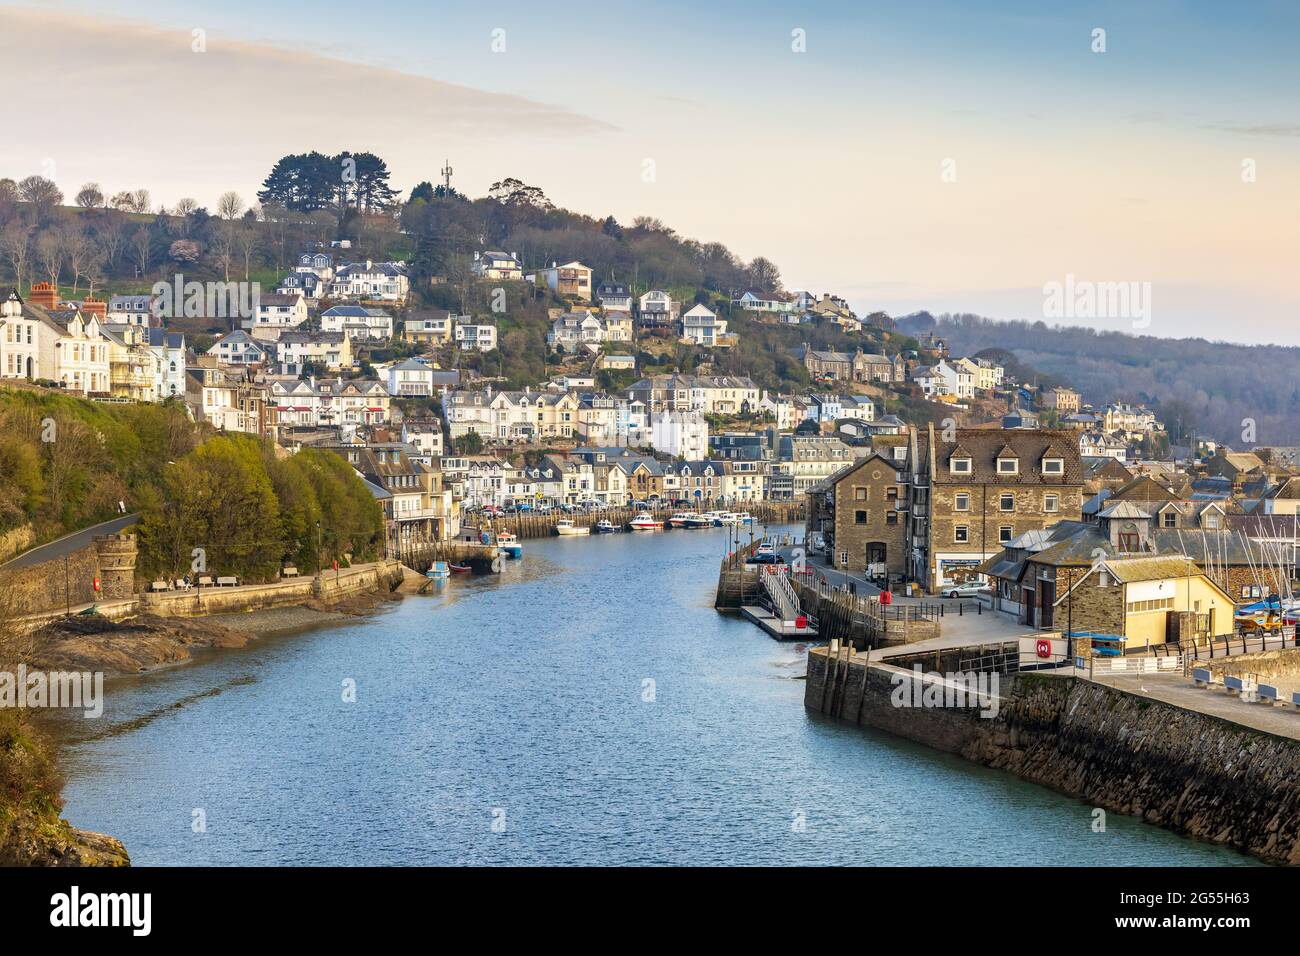 The Cornish coastal town of Looe, overlooking the Looe River, Cornwall, England. Taken early morning. Stock Photo